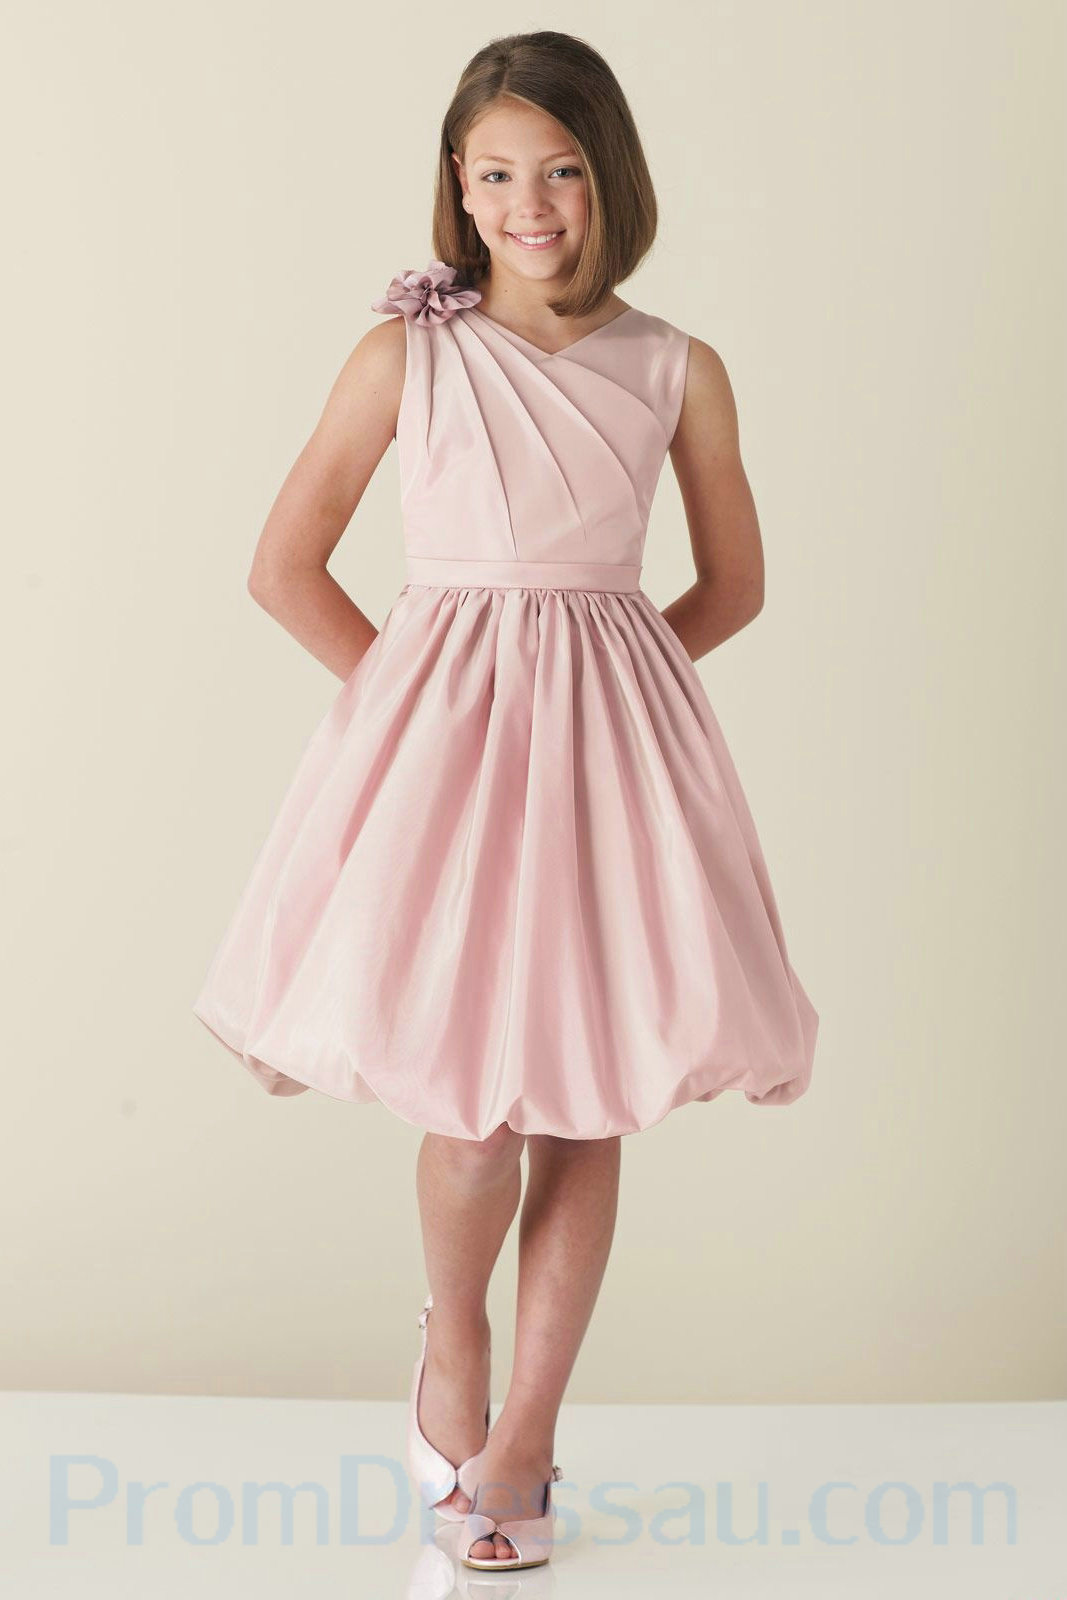 Girls Small Dress - Make You Look Like A Princess